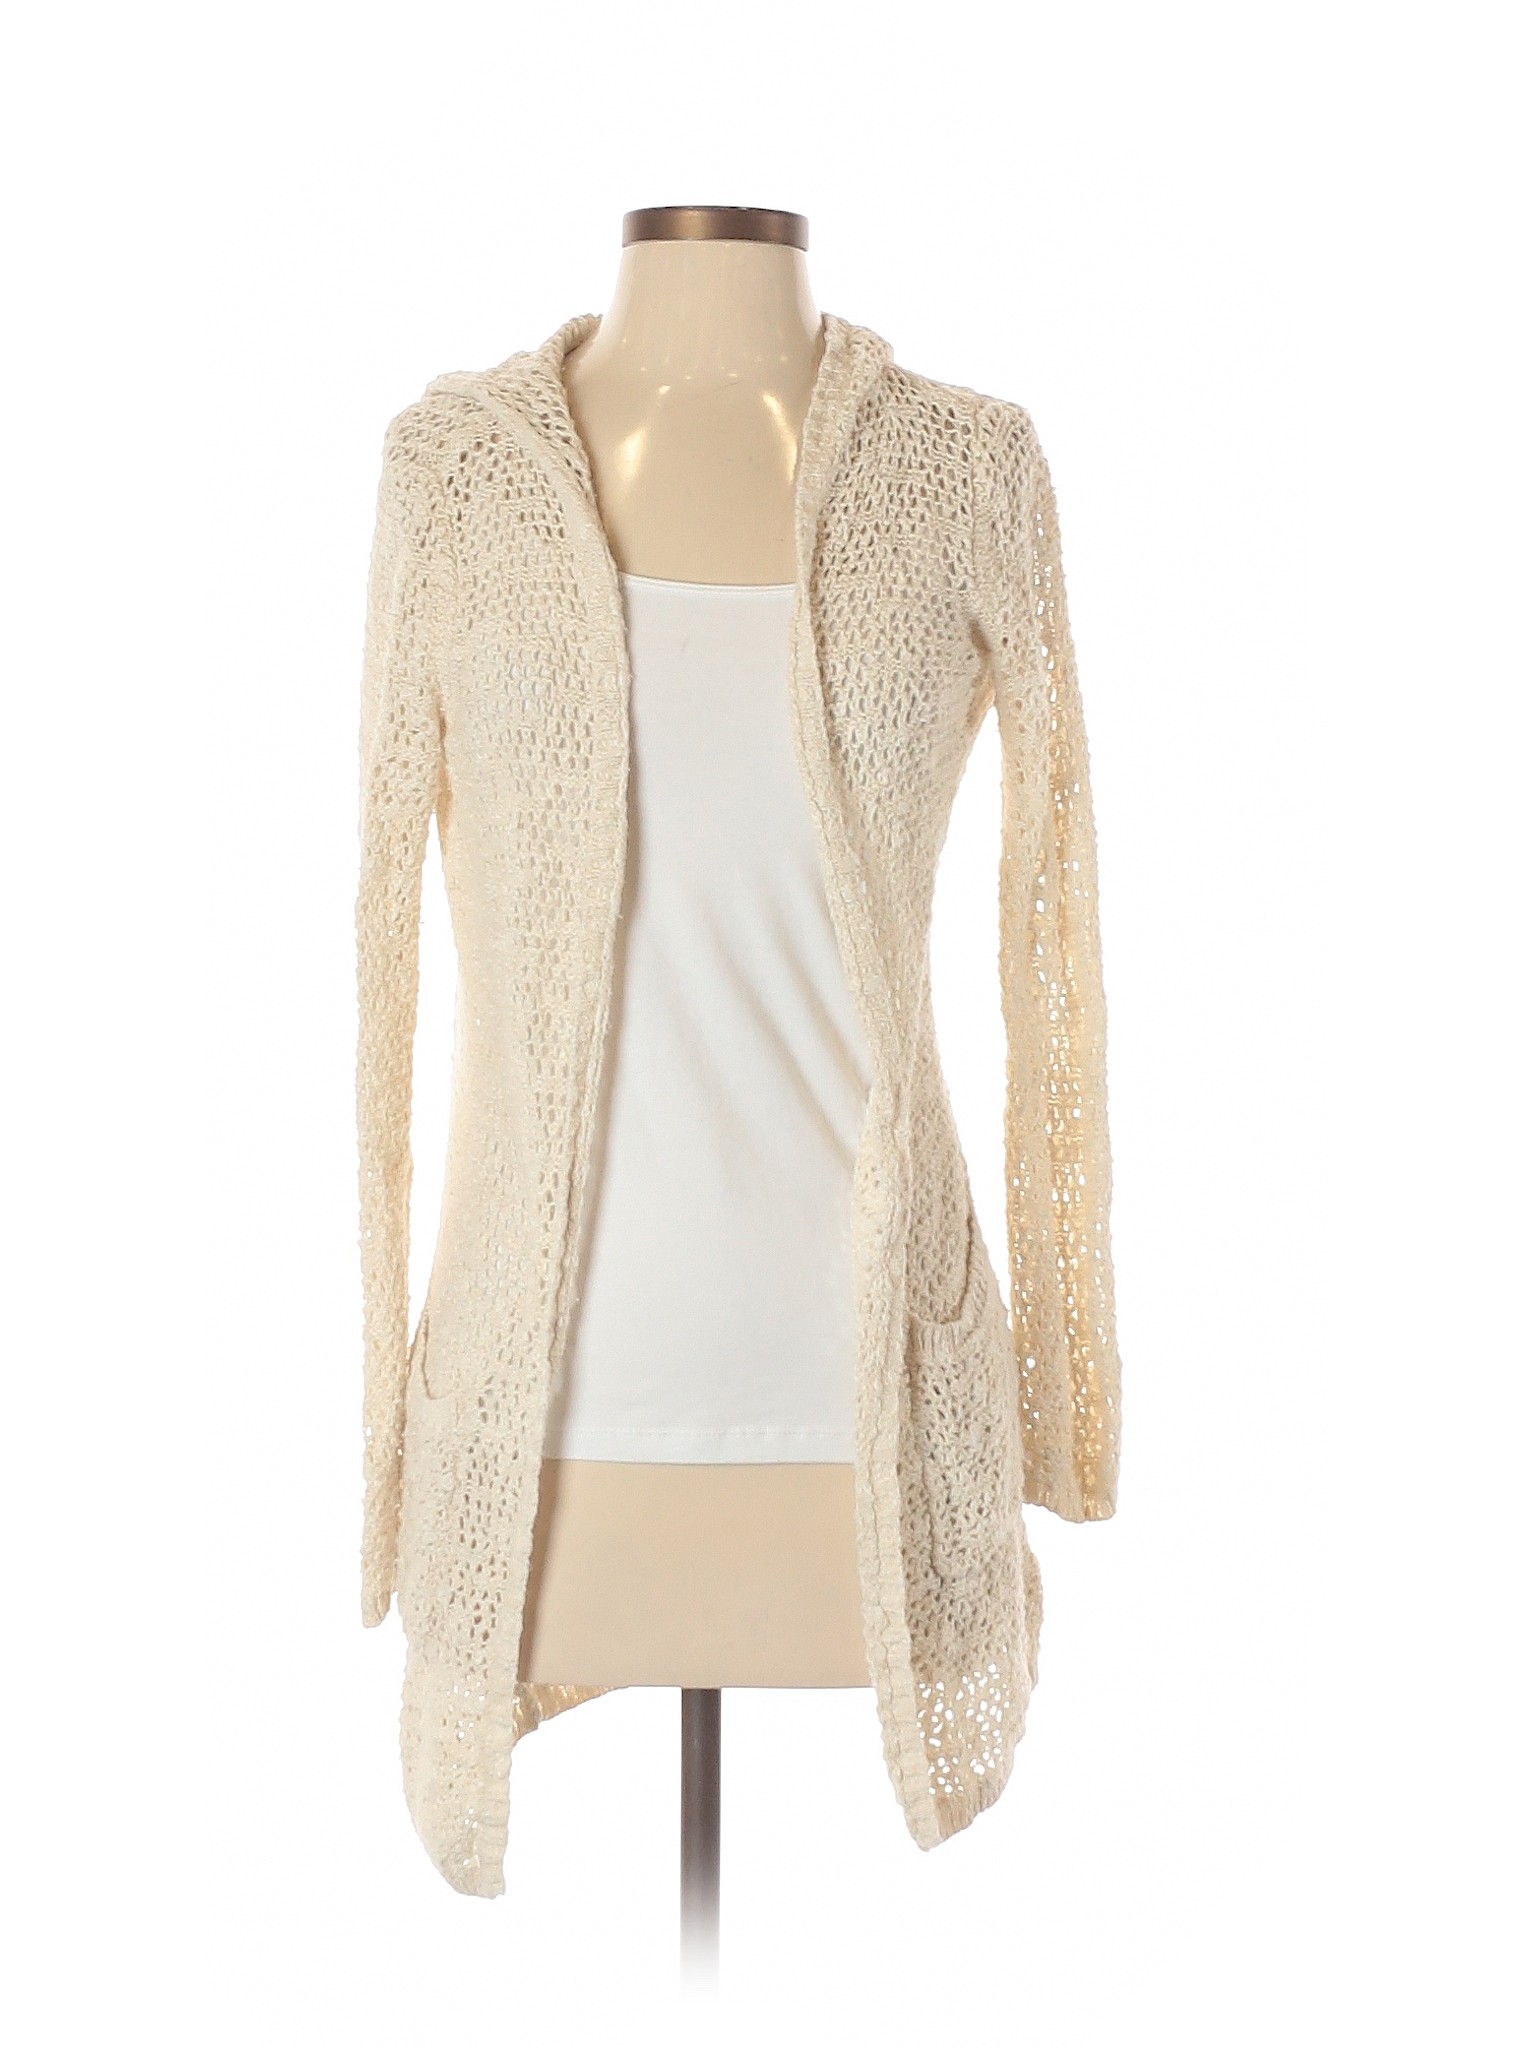 Cynthia Rowley TJX Solid Ivory Cardigan Size S - 70% off | thredUP